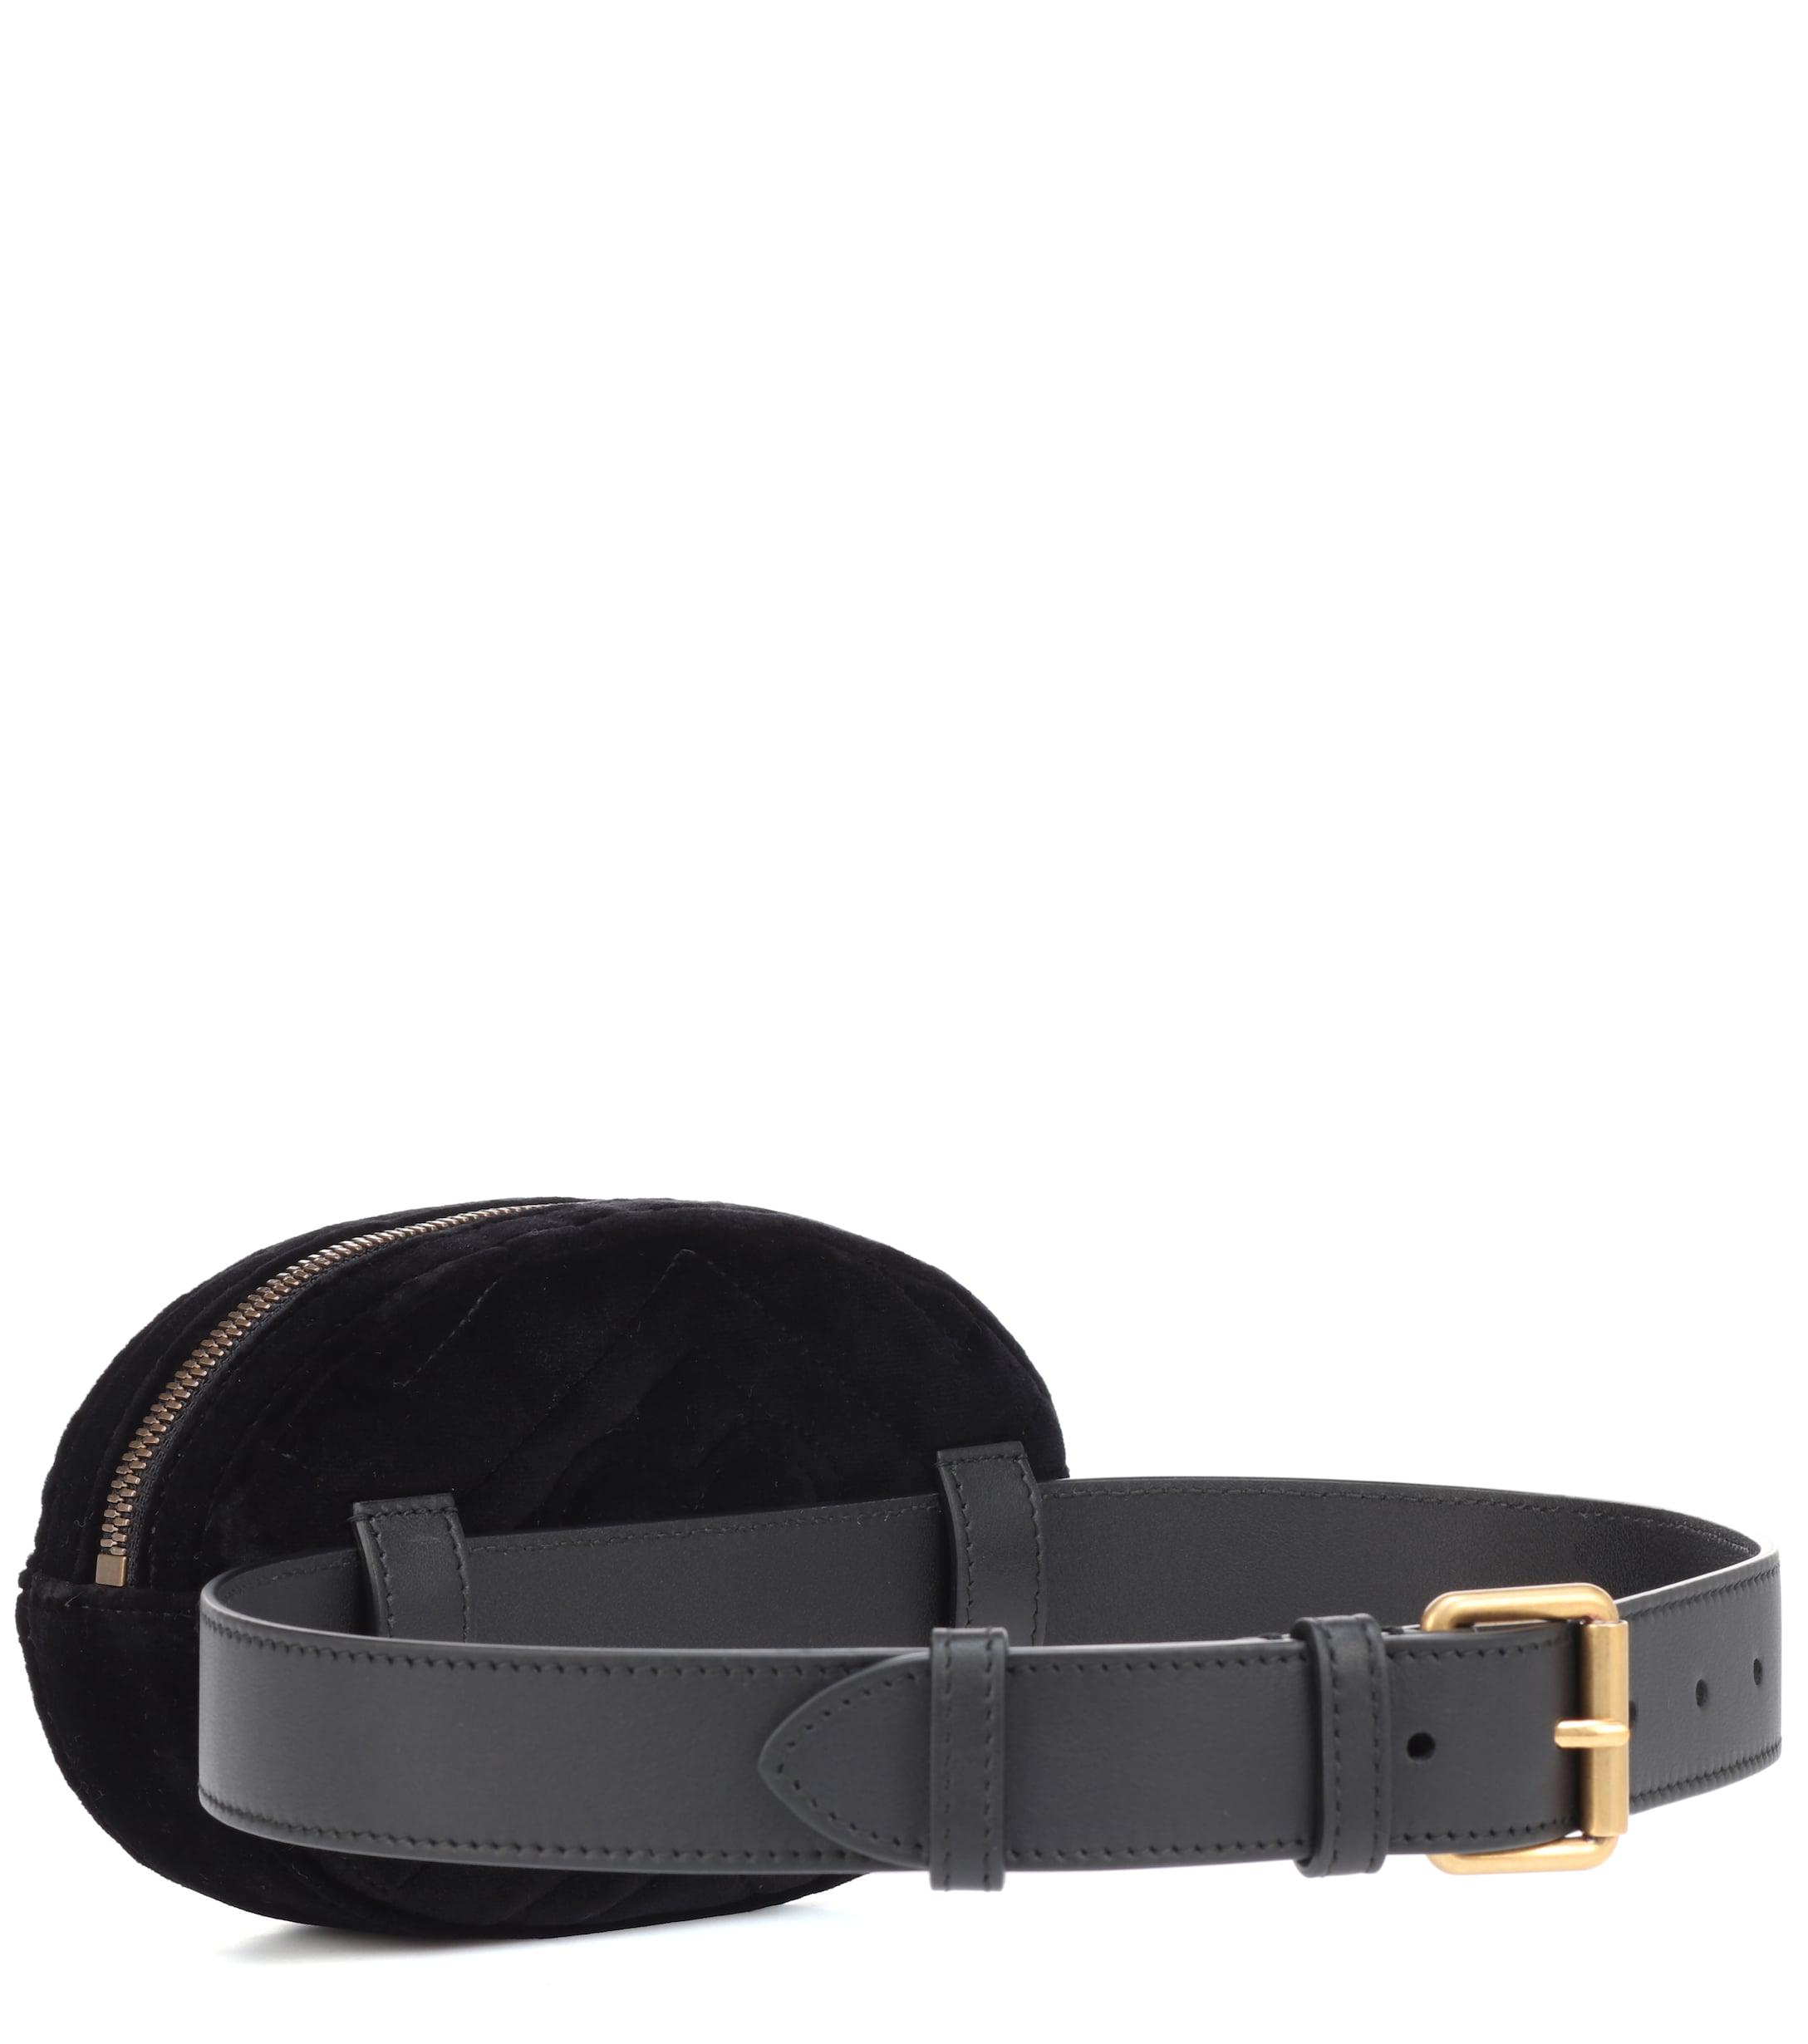 Gucci GG Marmont Velvet Belt Bag in Nero,Nero,Nero (Black) - Lyst